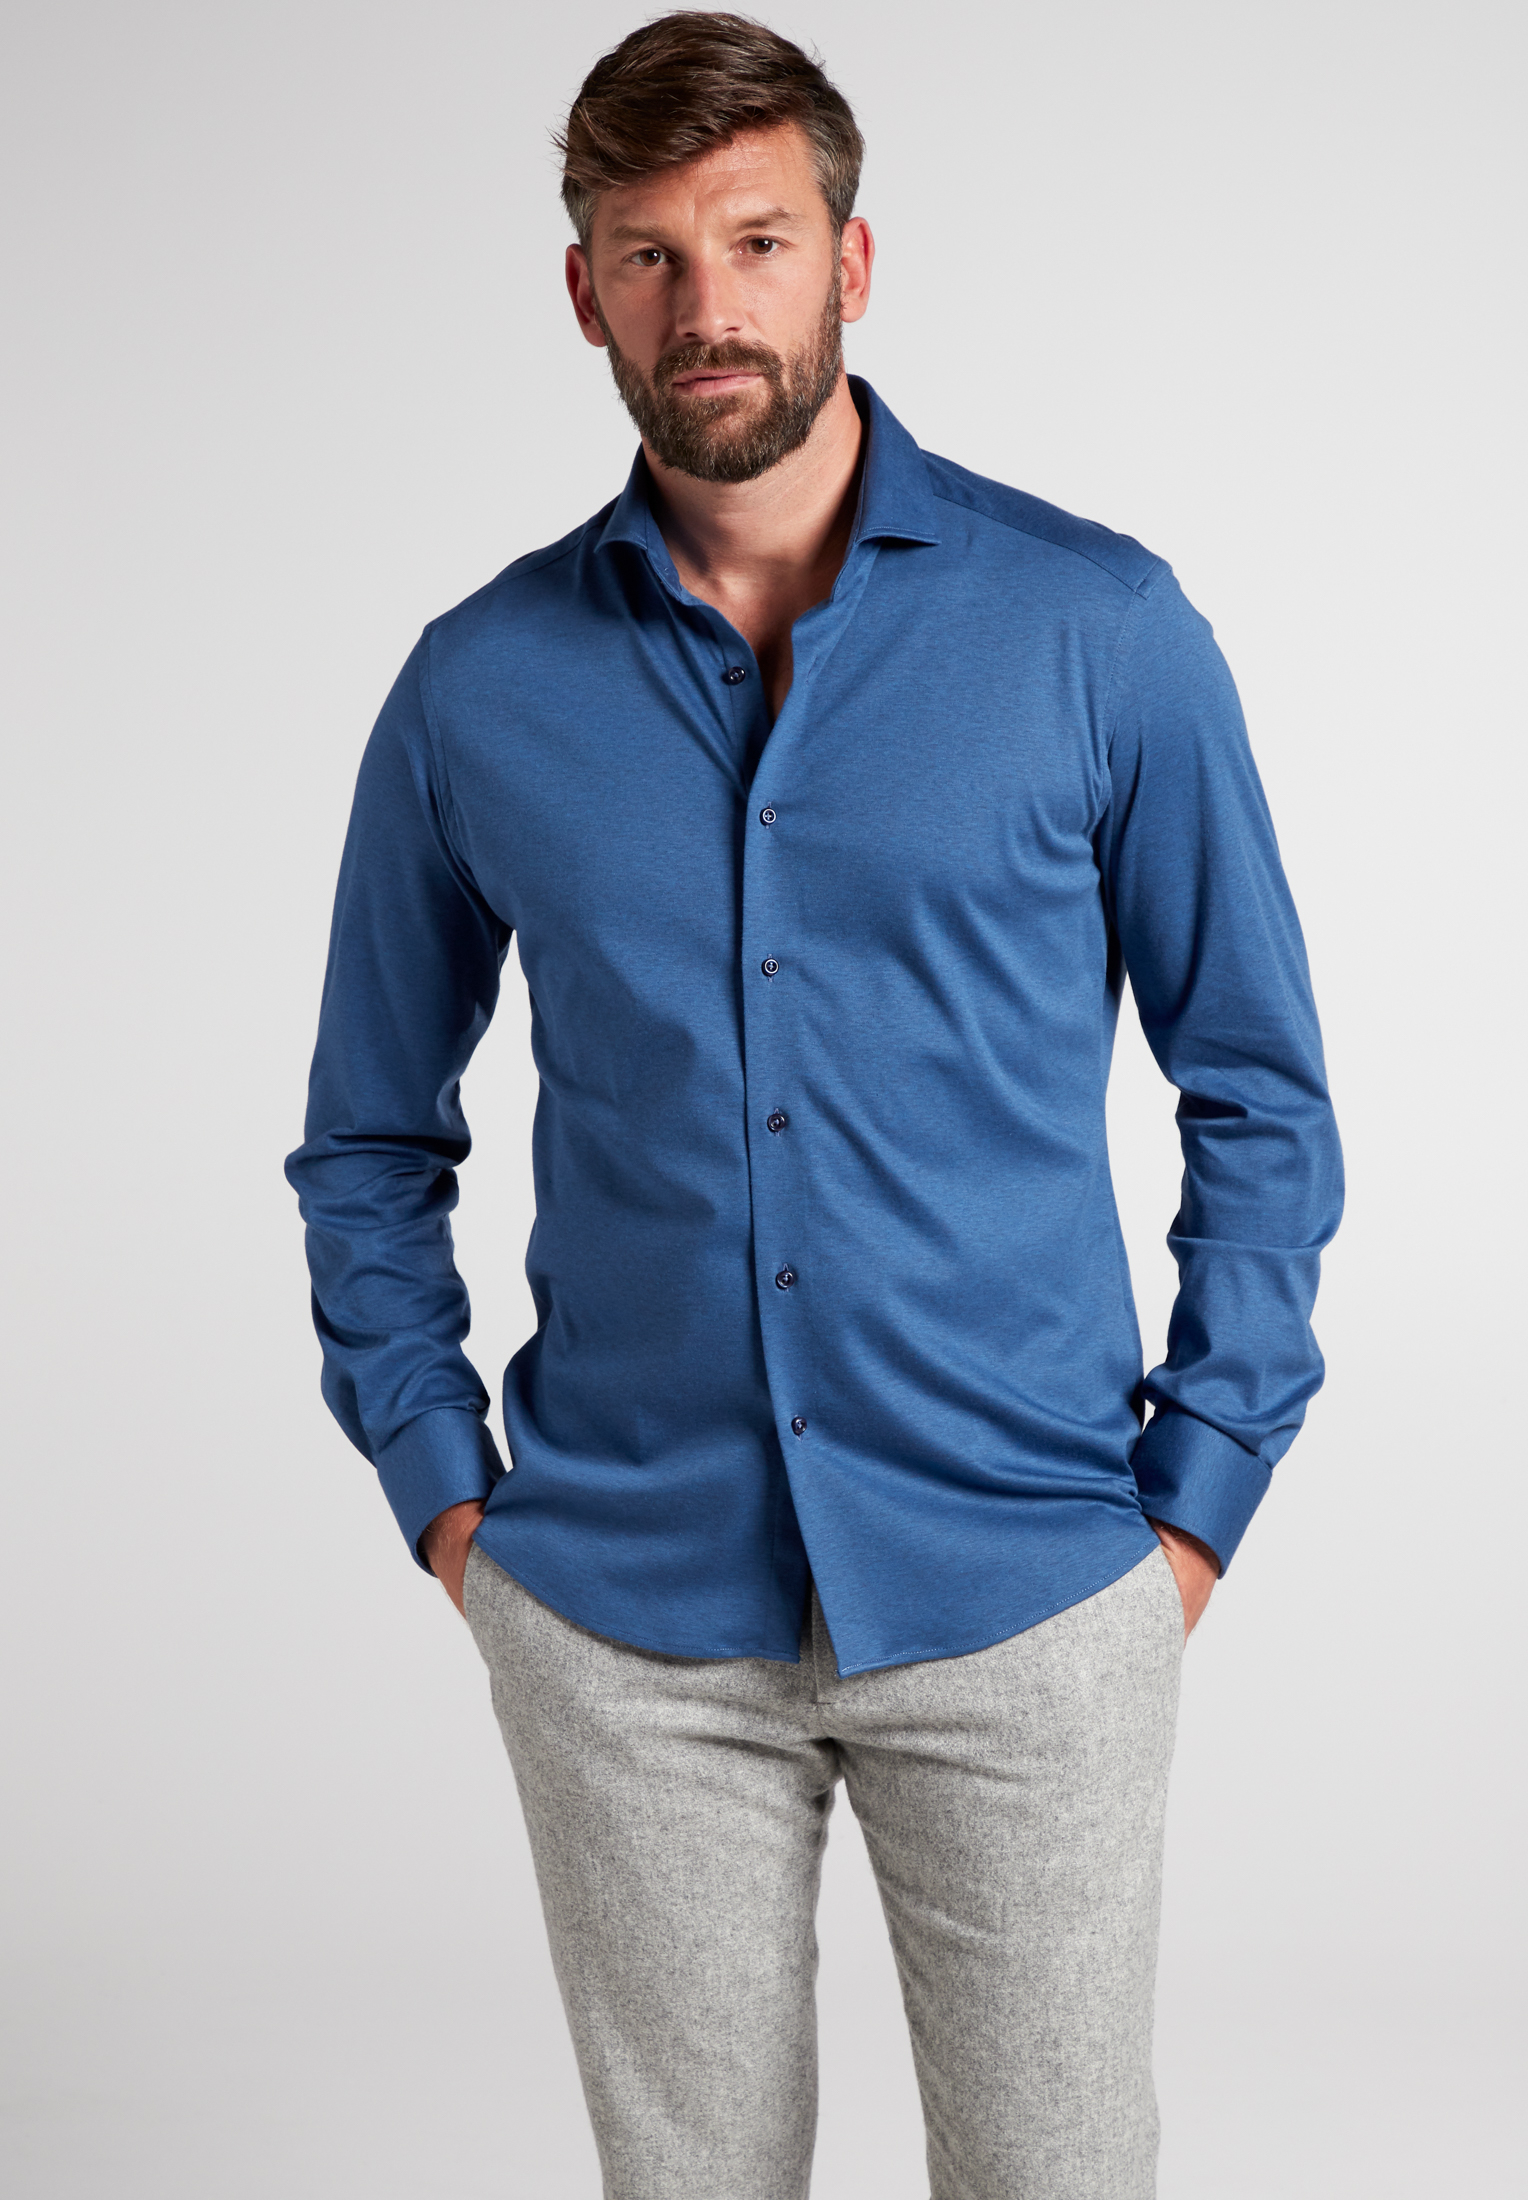 blau unifarben Shirt | Jersey 47 | 1SH00374-01-41-47-1/1 MODERN in | blau FIT | Langarm